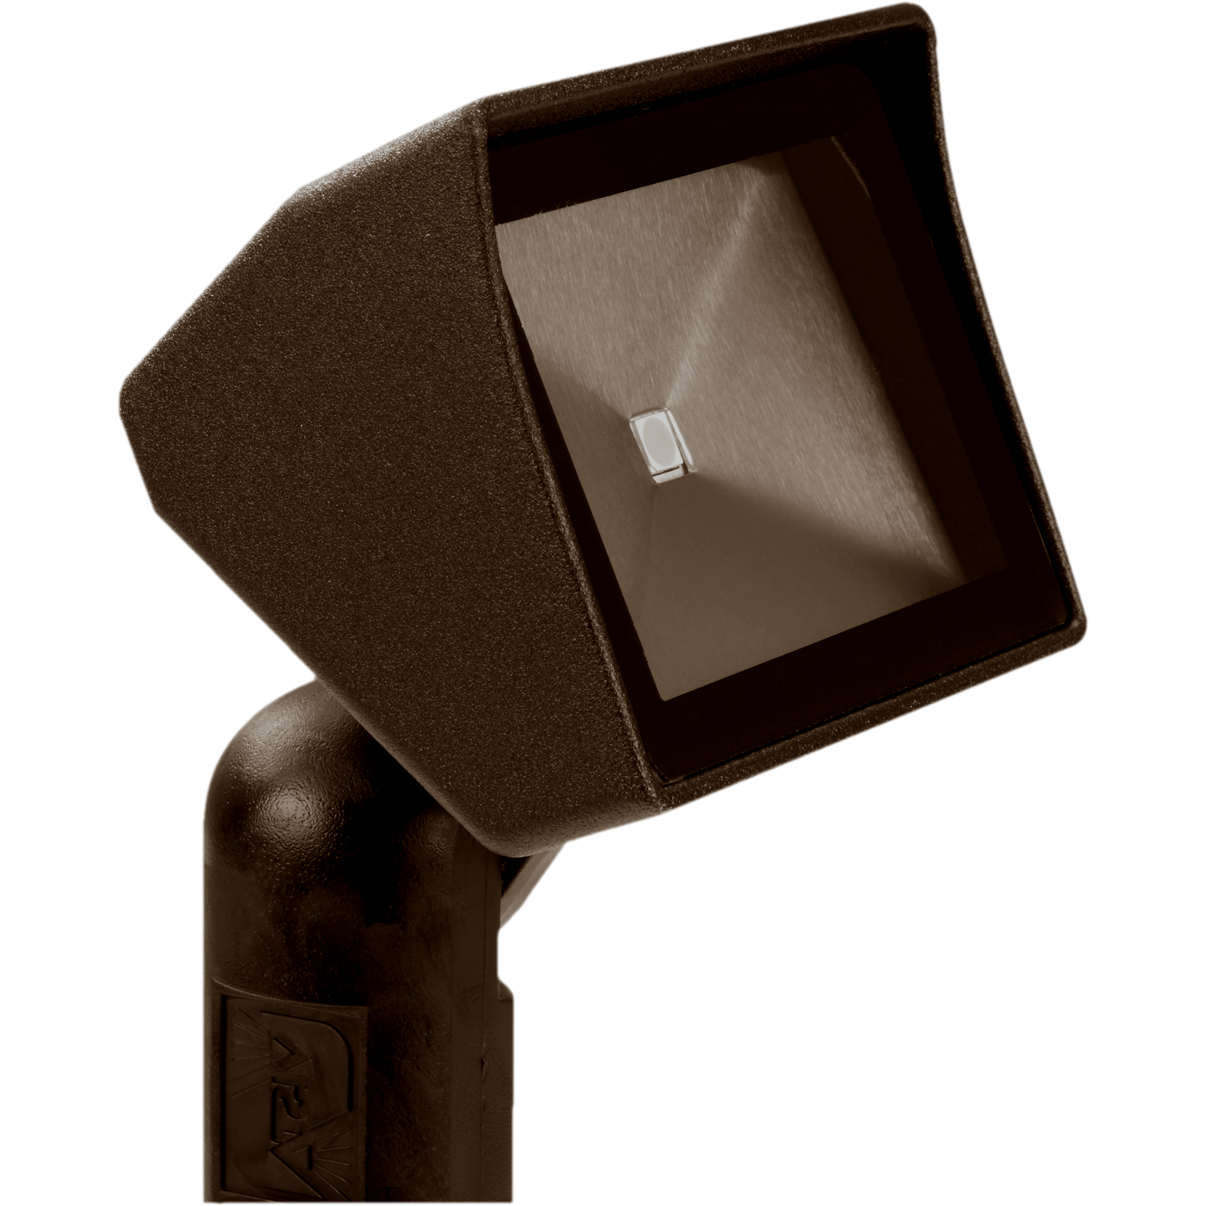 Vista Outdoor Lighting - GR-5105-DZ-4-W - Aluminum Mini Area Light, Dark Bronze, Warm